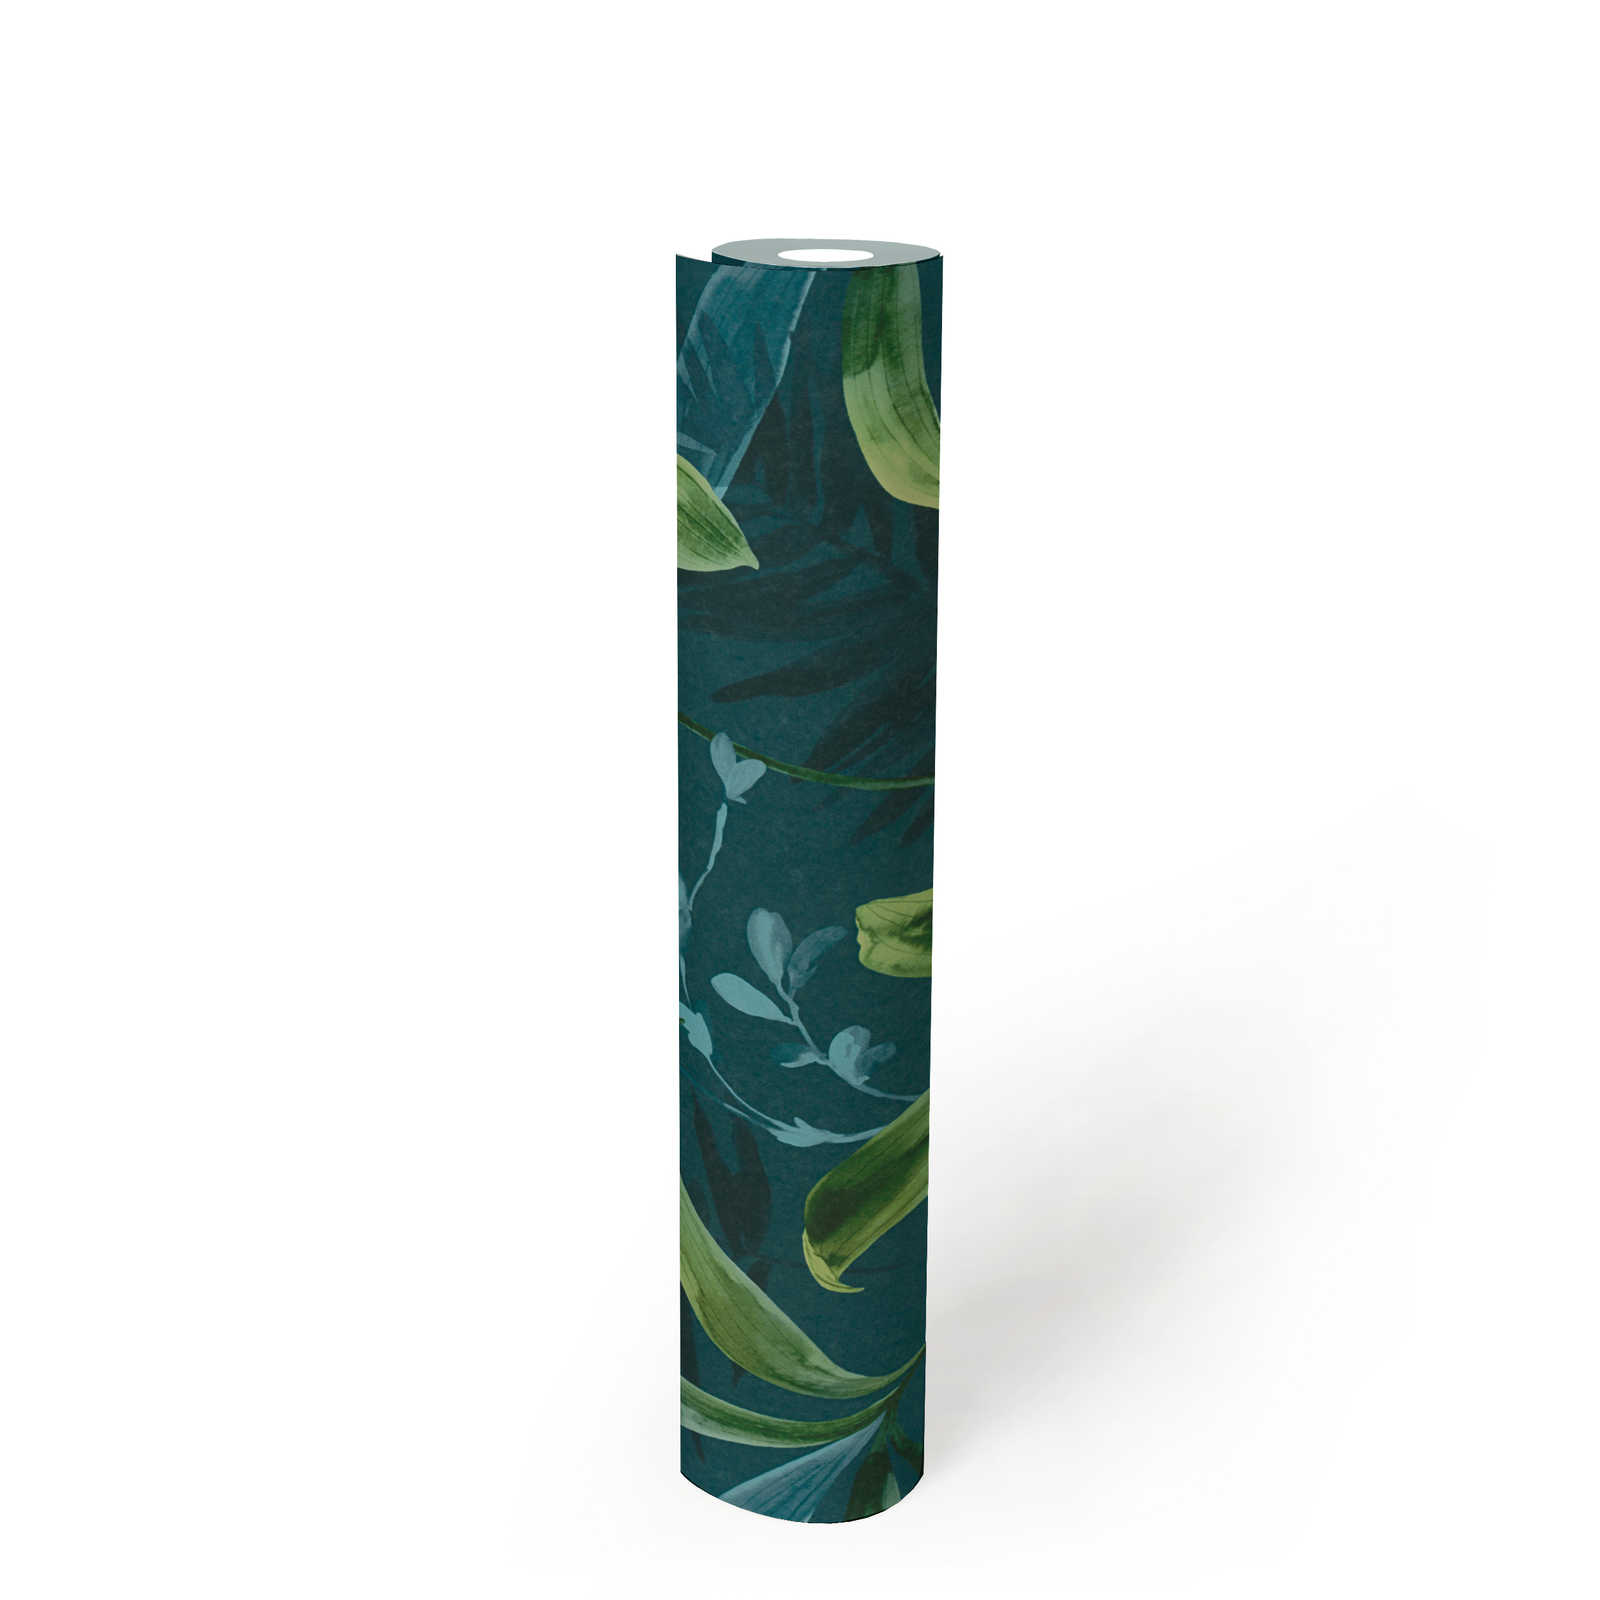             Dunkelgrüne Tapete mit Blätter Muster im Aquarell Stil – Blau, Grün
        